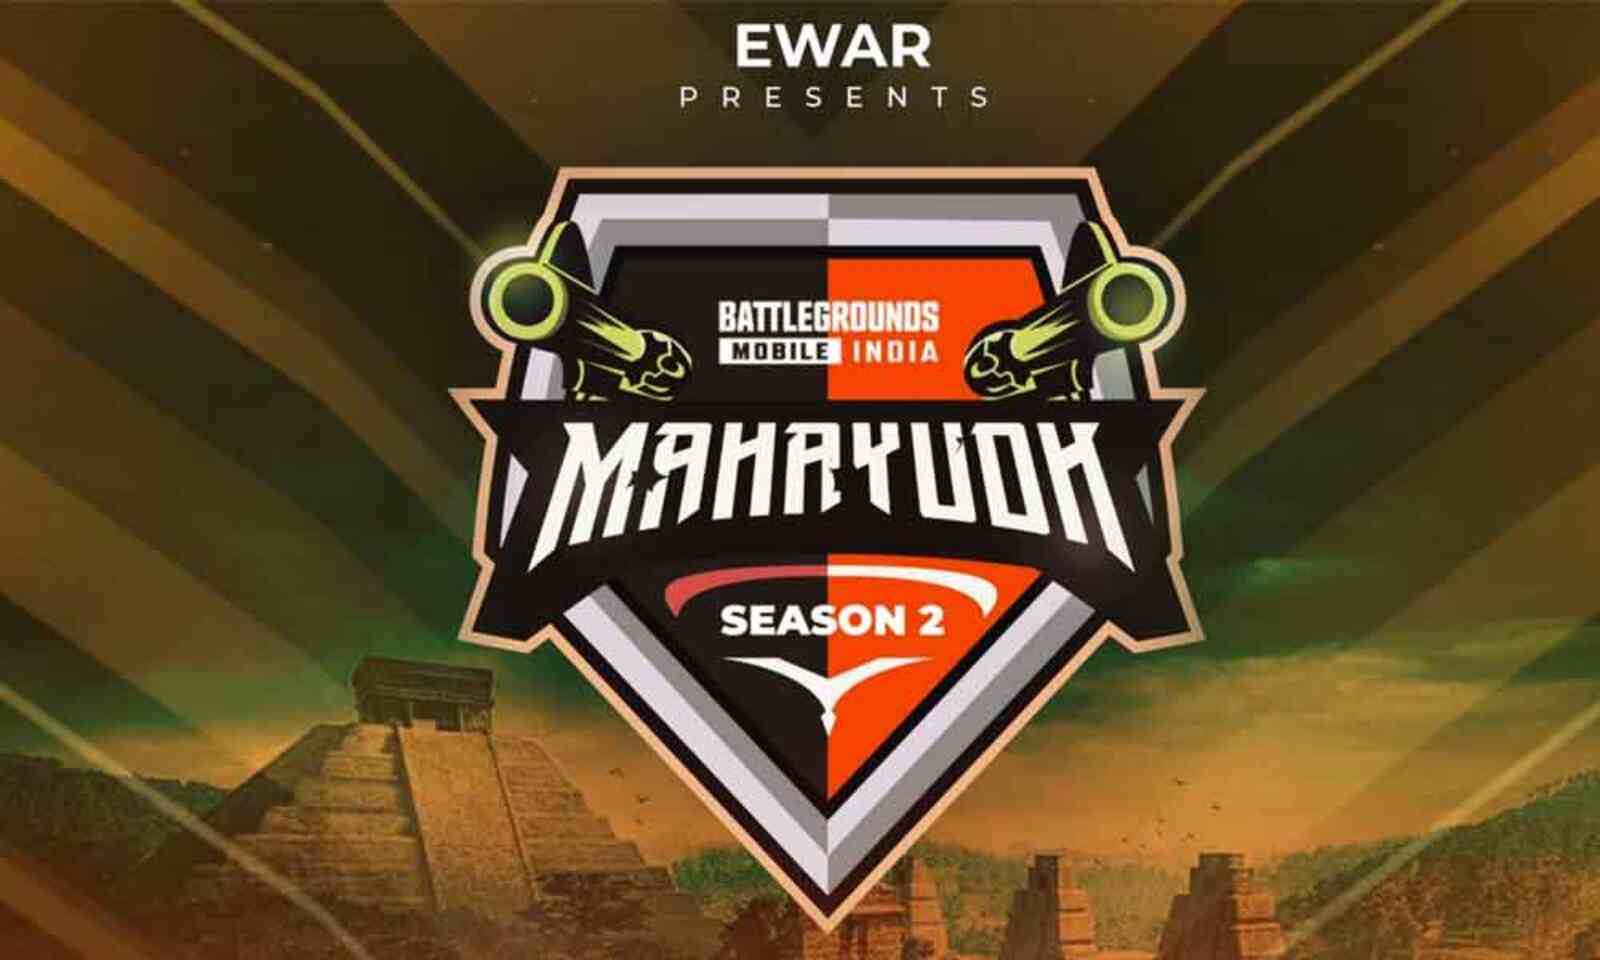 EWar Games Unveils Season 2 of its Mega Battlegrounds Mobile India Tournament EWar BGMI Mahayudh